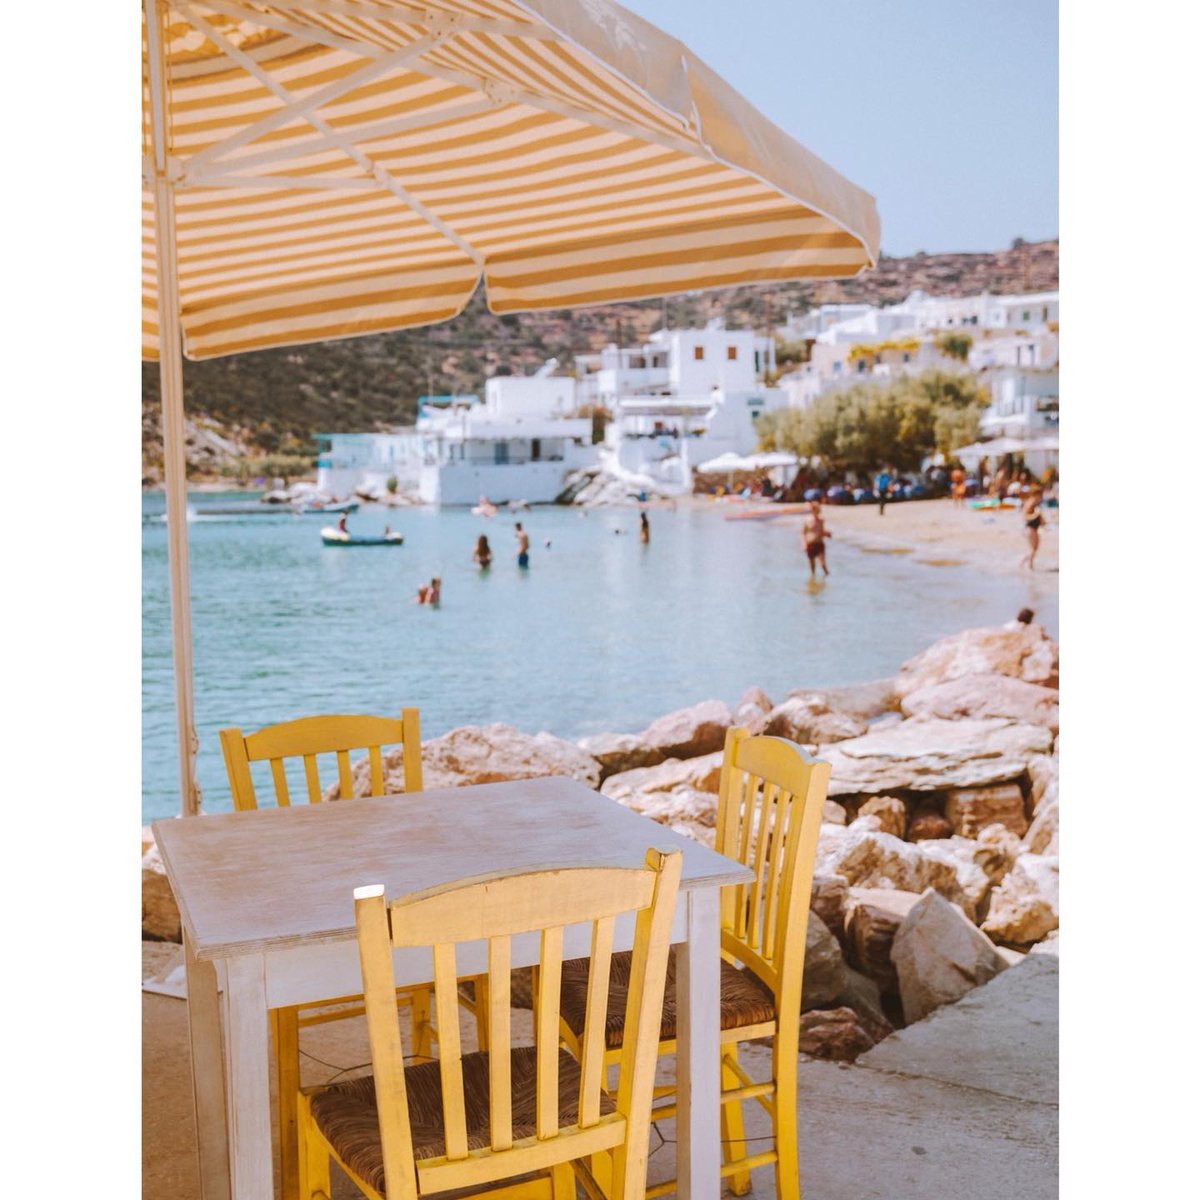 Enjoying the umbrella shade and the relaxing atmosphere of #Faros on #Sifnos!

sifnos.gr

📷: Coline (instagram.com/coline_f_)

#visitsifnosisland #visitsifnos #GEM #beach #weddings  #hiking #visitgreece #greece  #cyclades #greekislands #vacation #holidays #Σίφνος